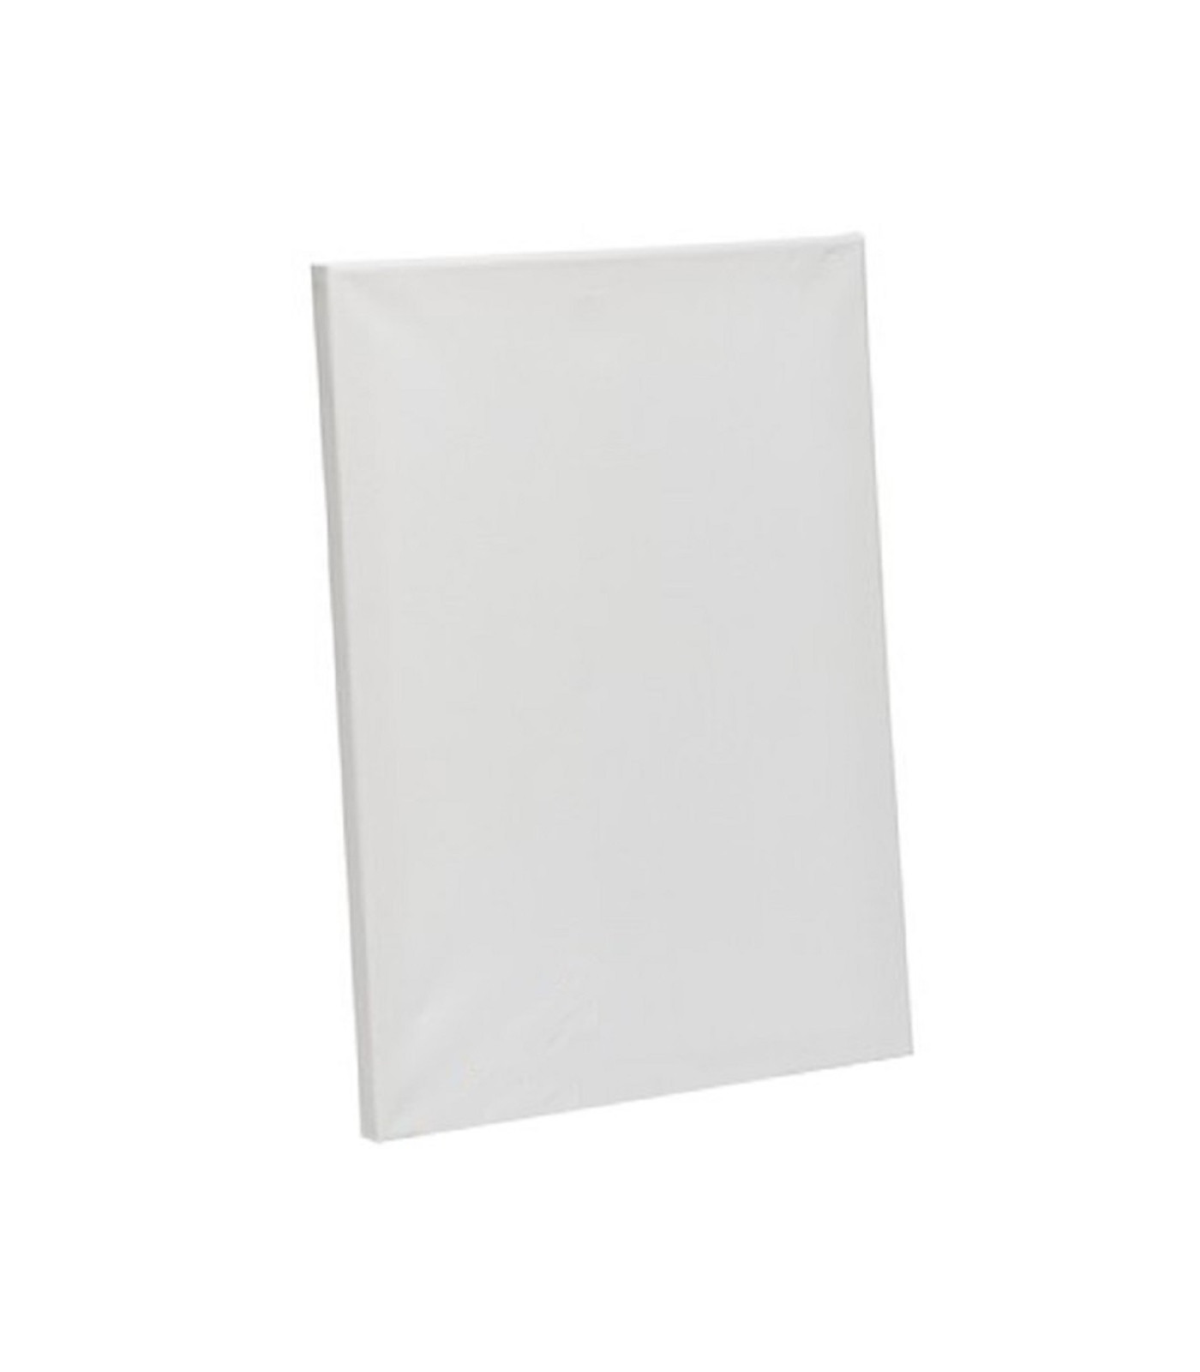 Lienzo blanco para pintar 30 x 40 cm, 100% algodón, grosor 1,5 cm